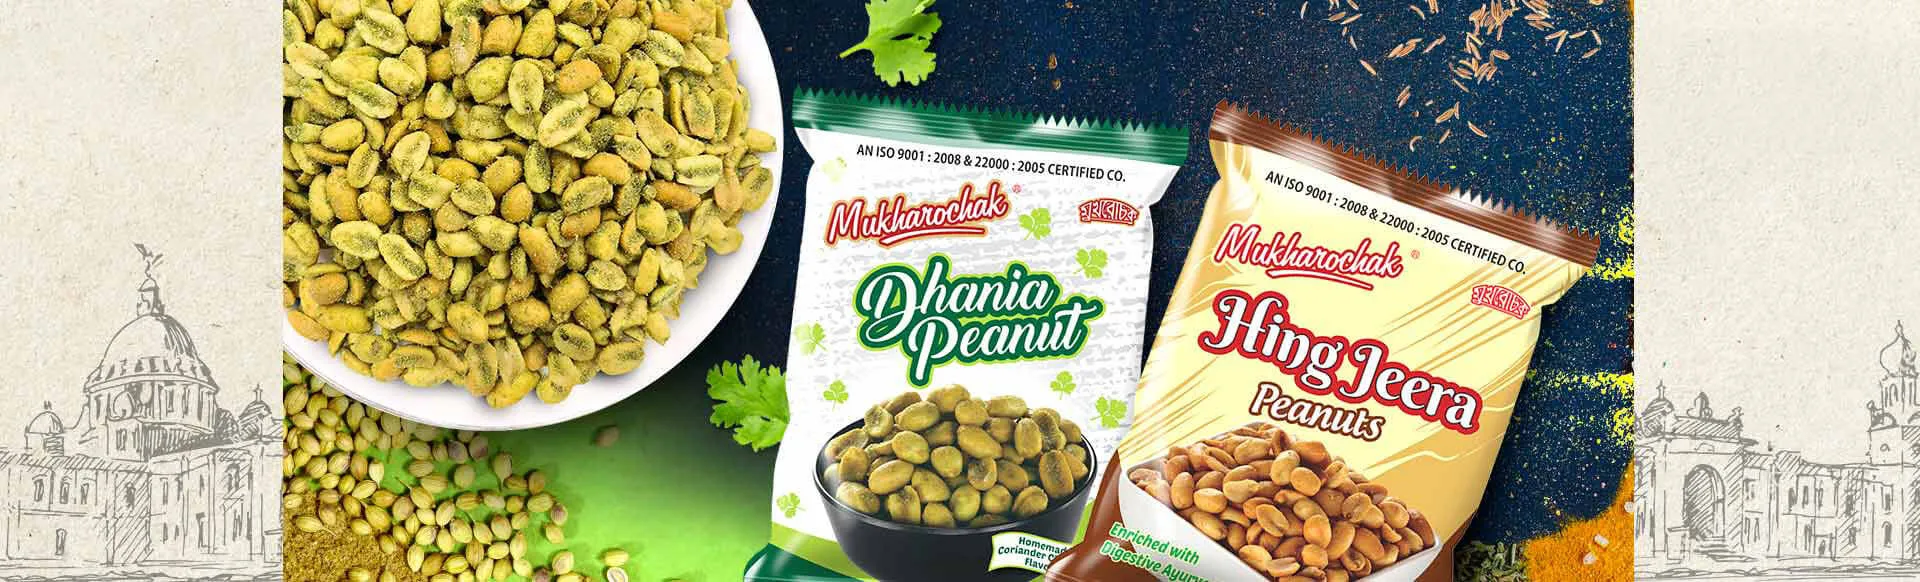 Mukharochak - A bowl full of dhania peanut, packets of hing jeera peanuts, and dhania peanut